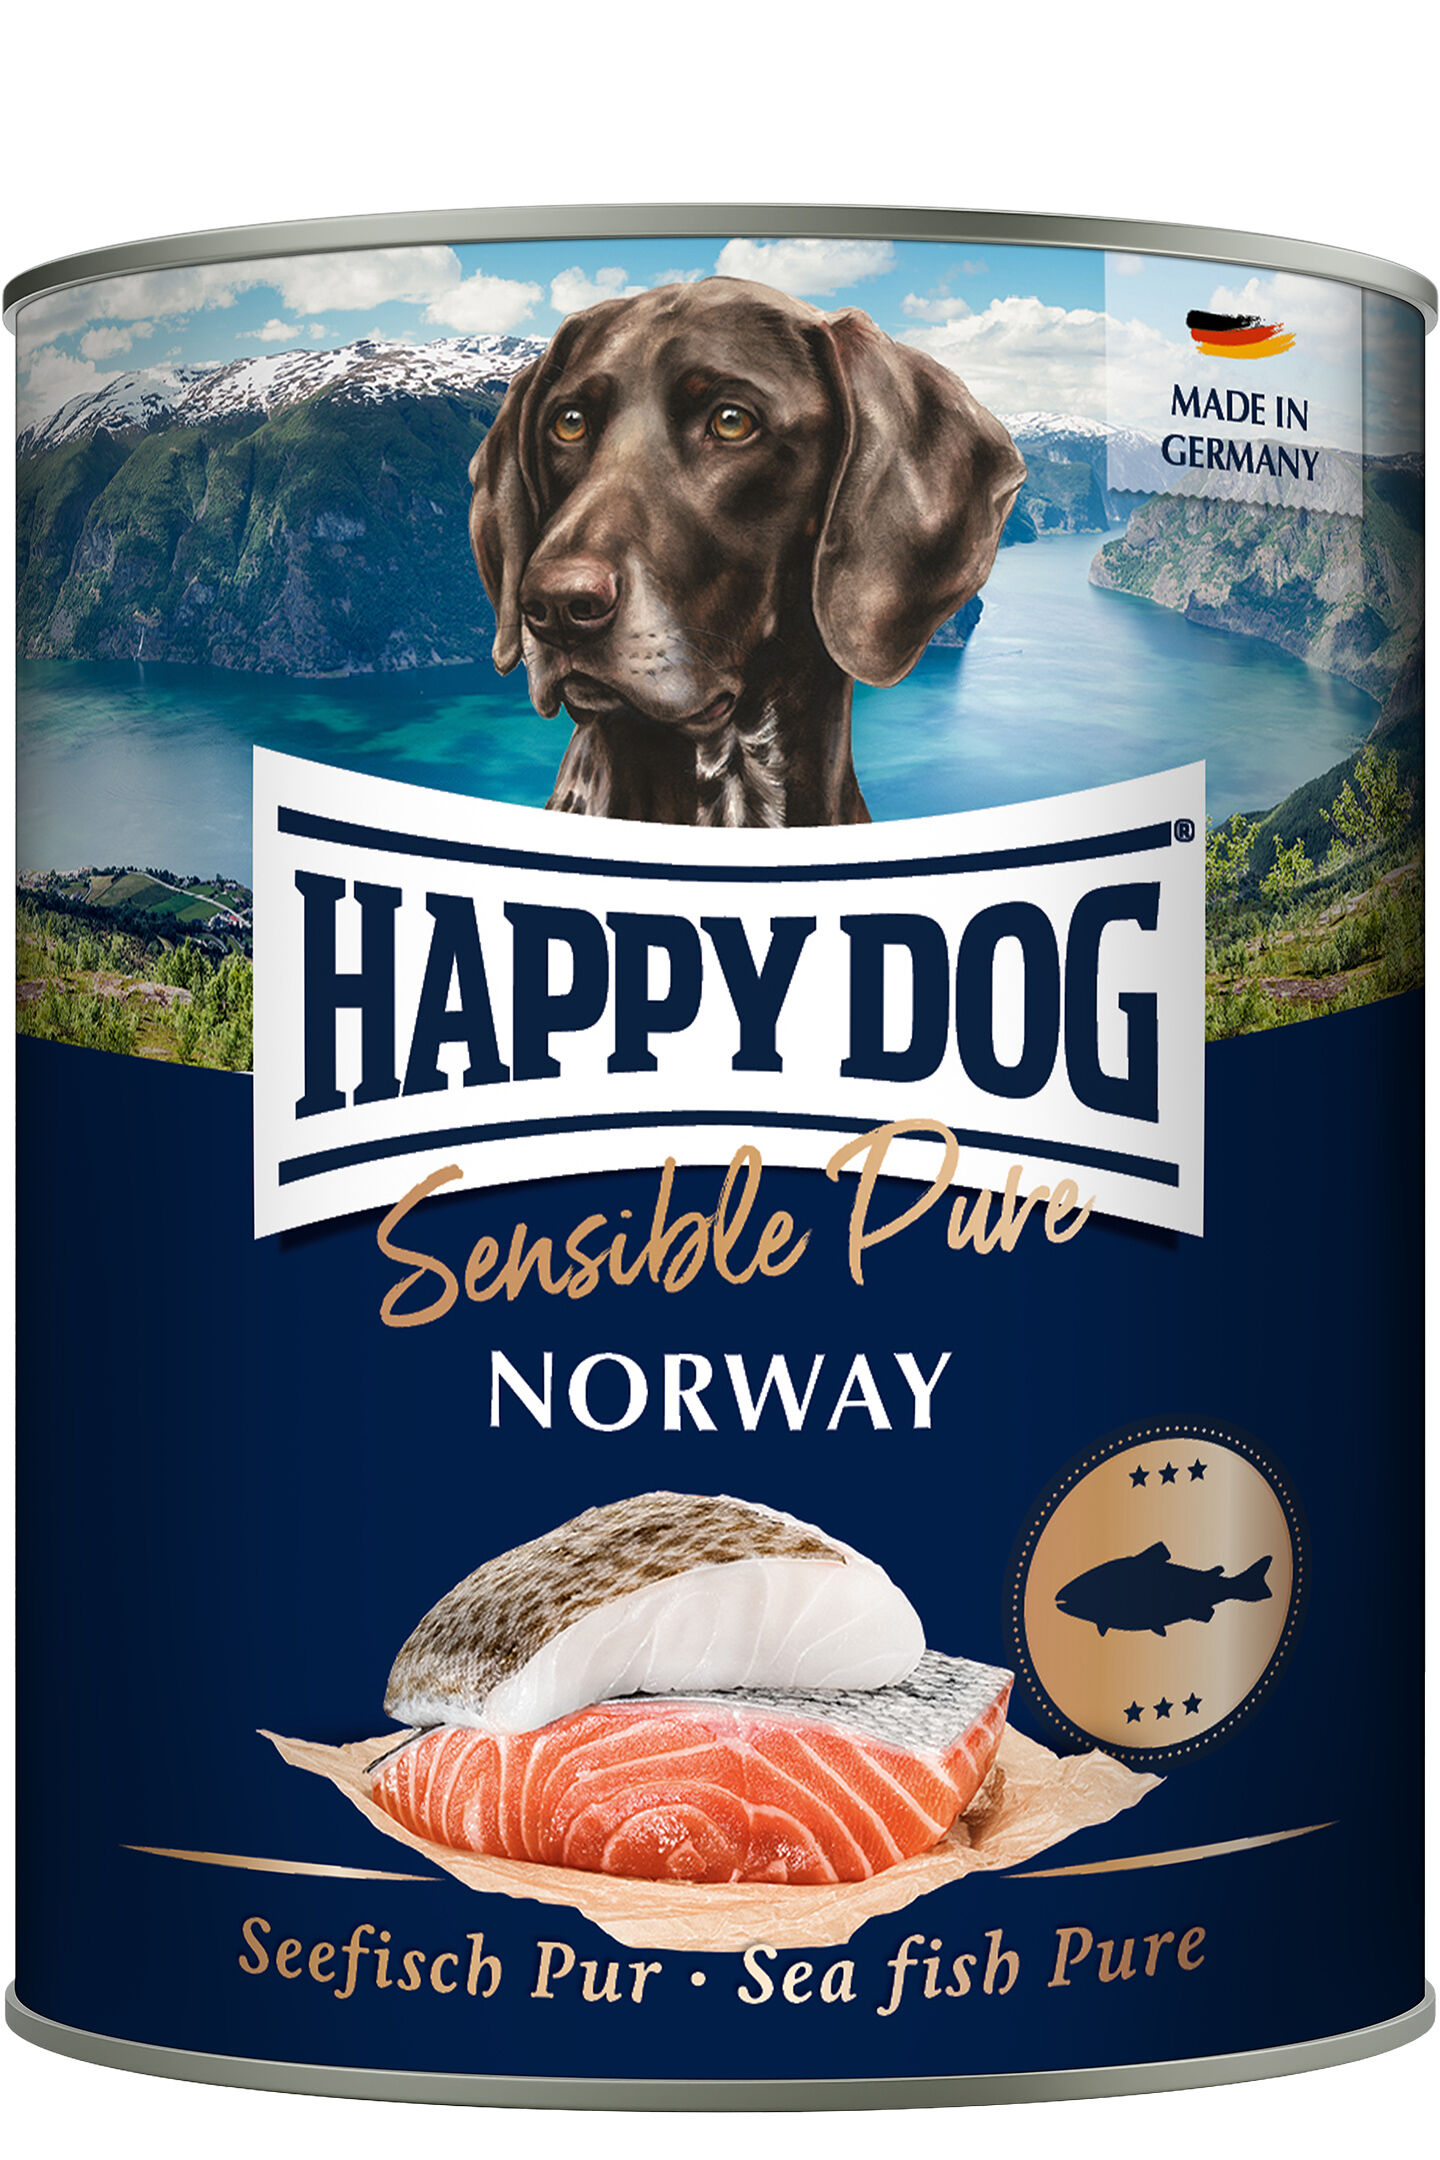 Sensible Pure Norway